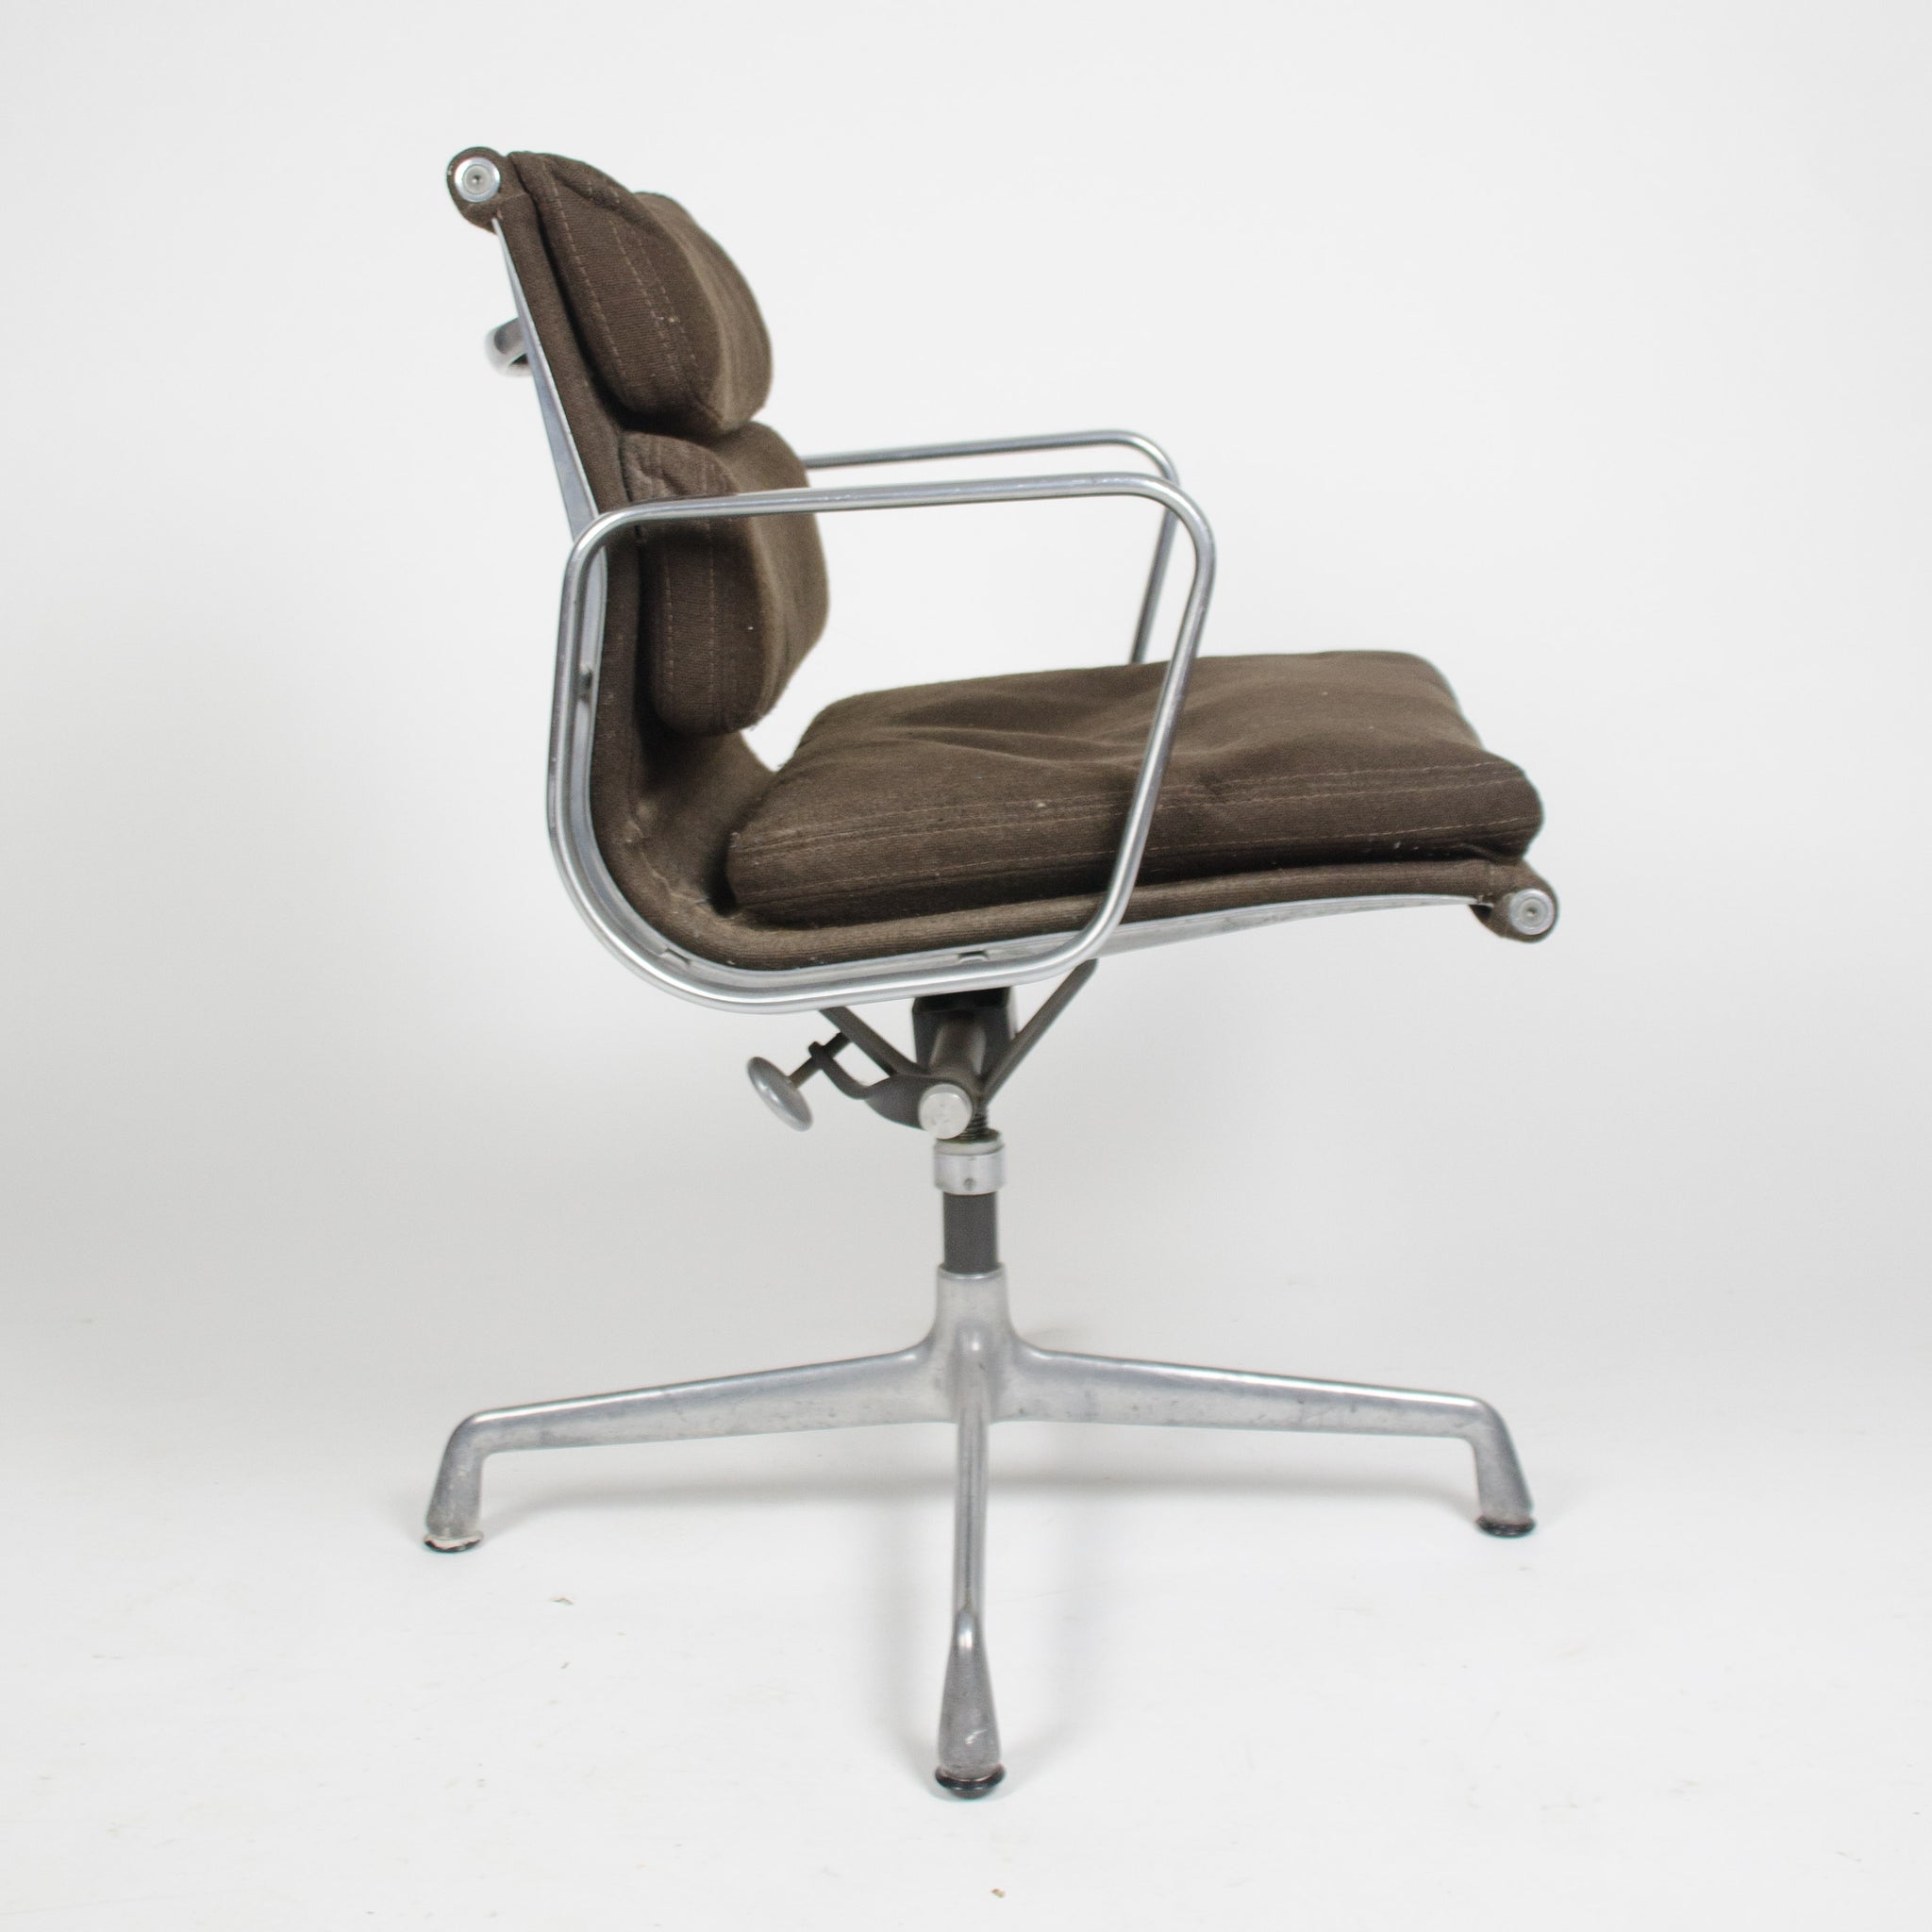 SOLD Eames Herman Miller Soft Pad Aluminum Group Desk Chair Brown Hopsack 1975